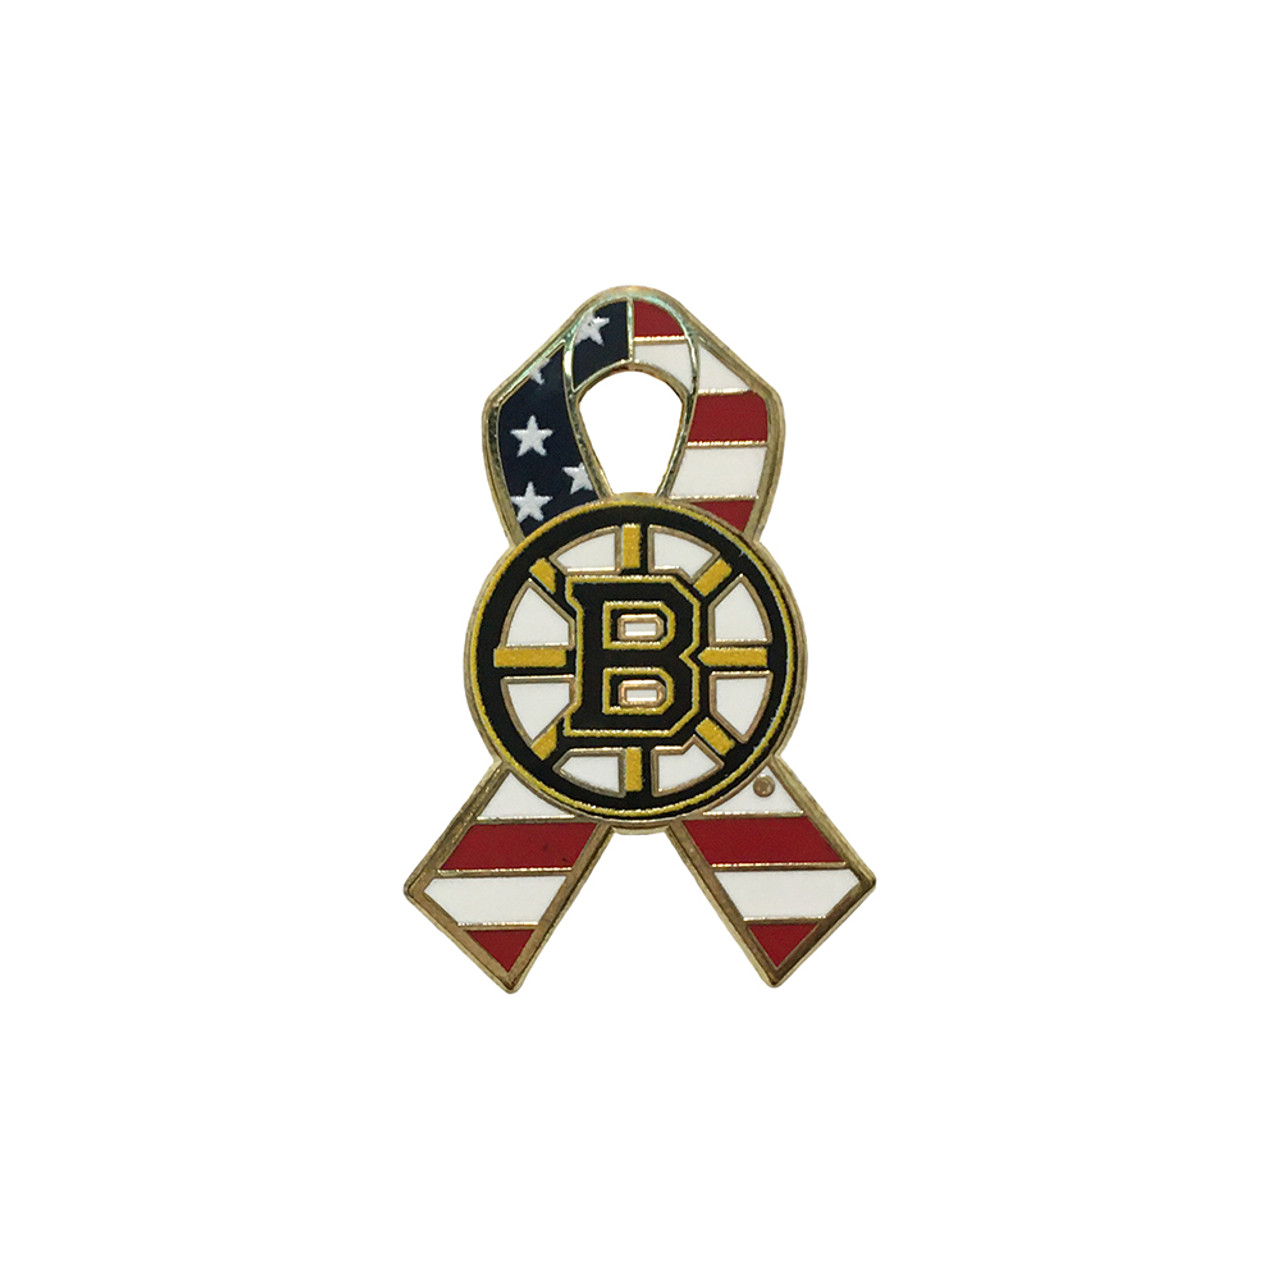 Pin on Boston